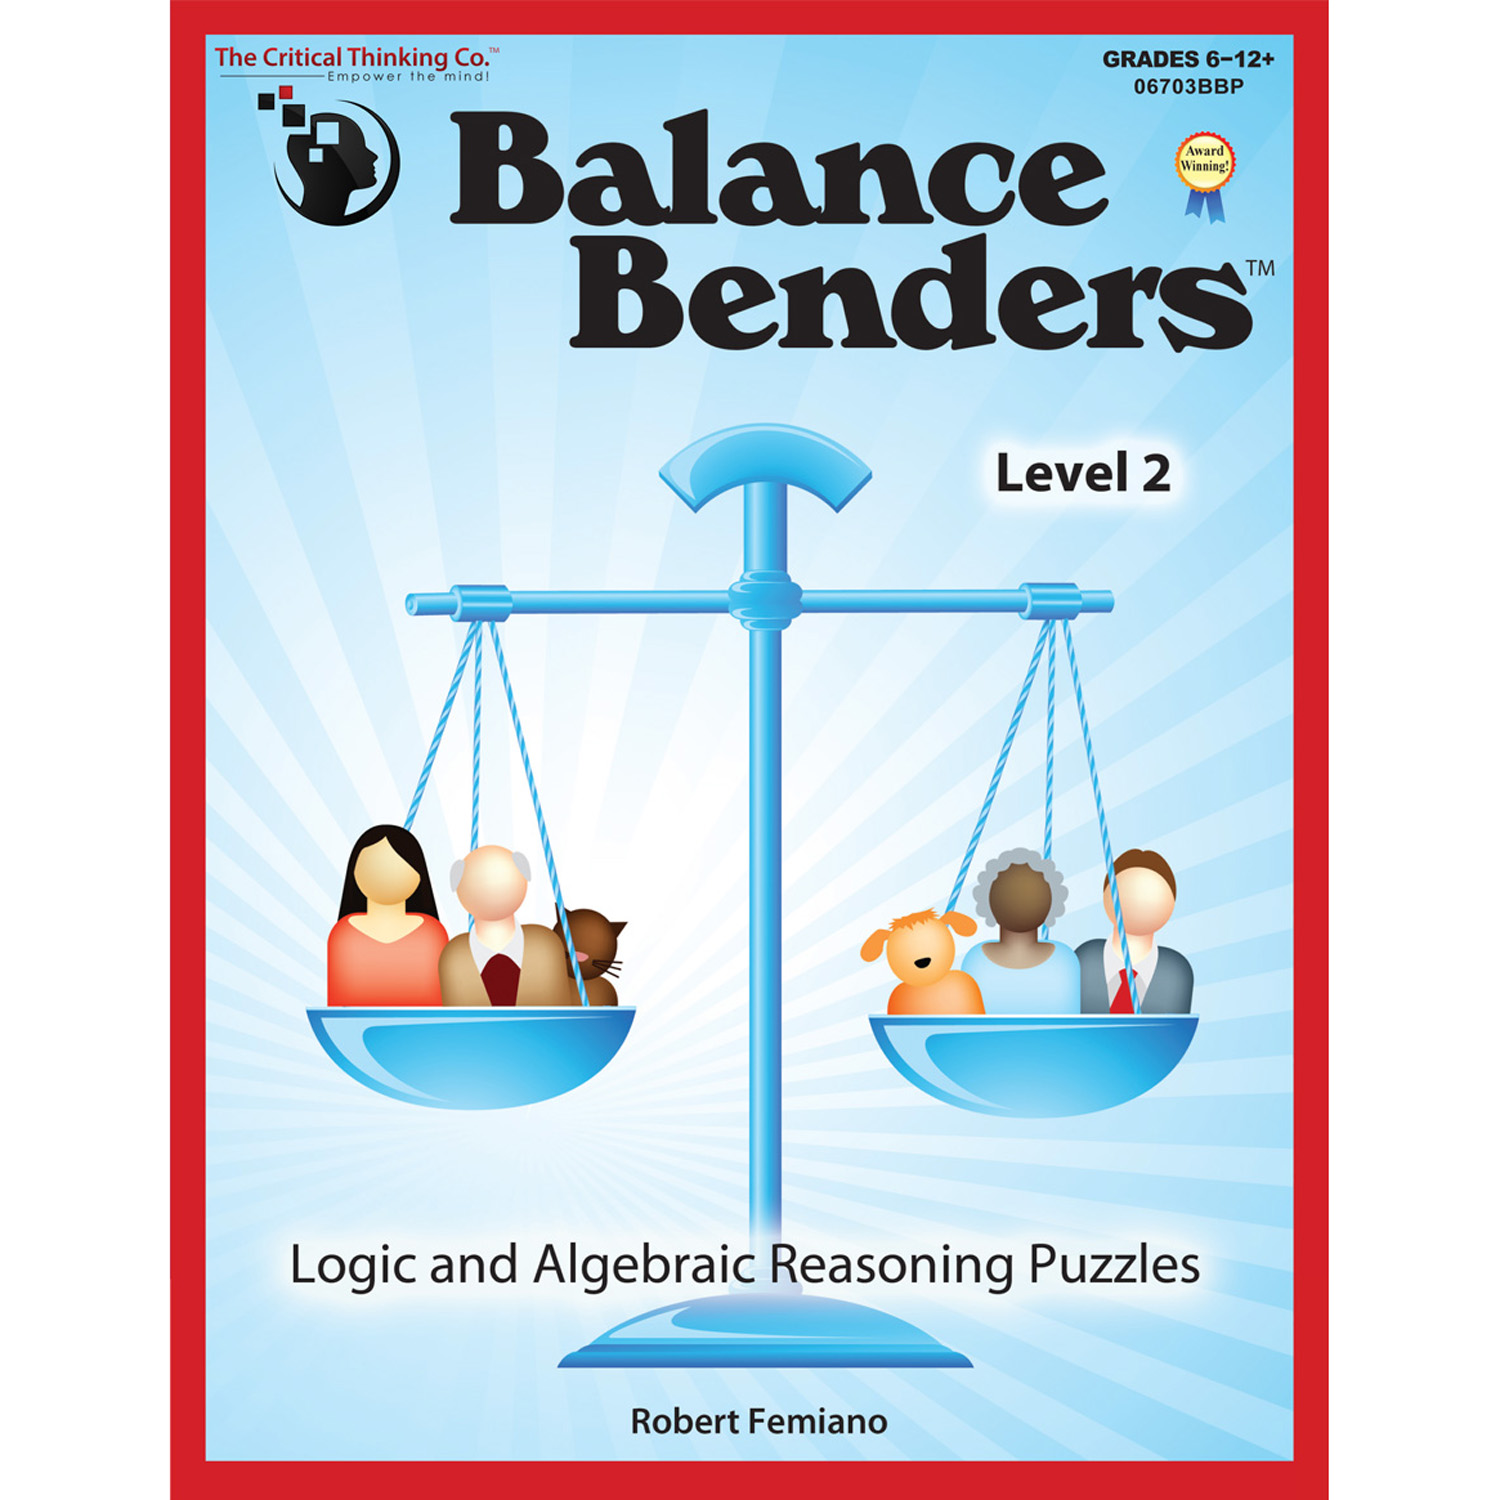 Balance Benders, Math, Level 2, Grades 6-12+